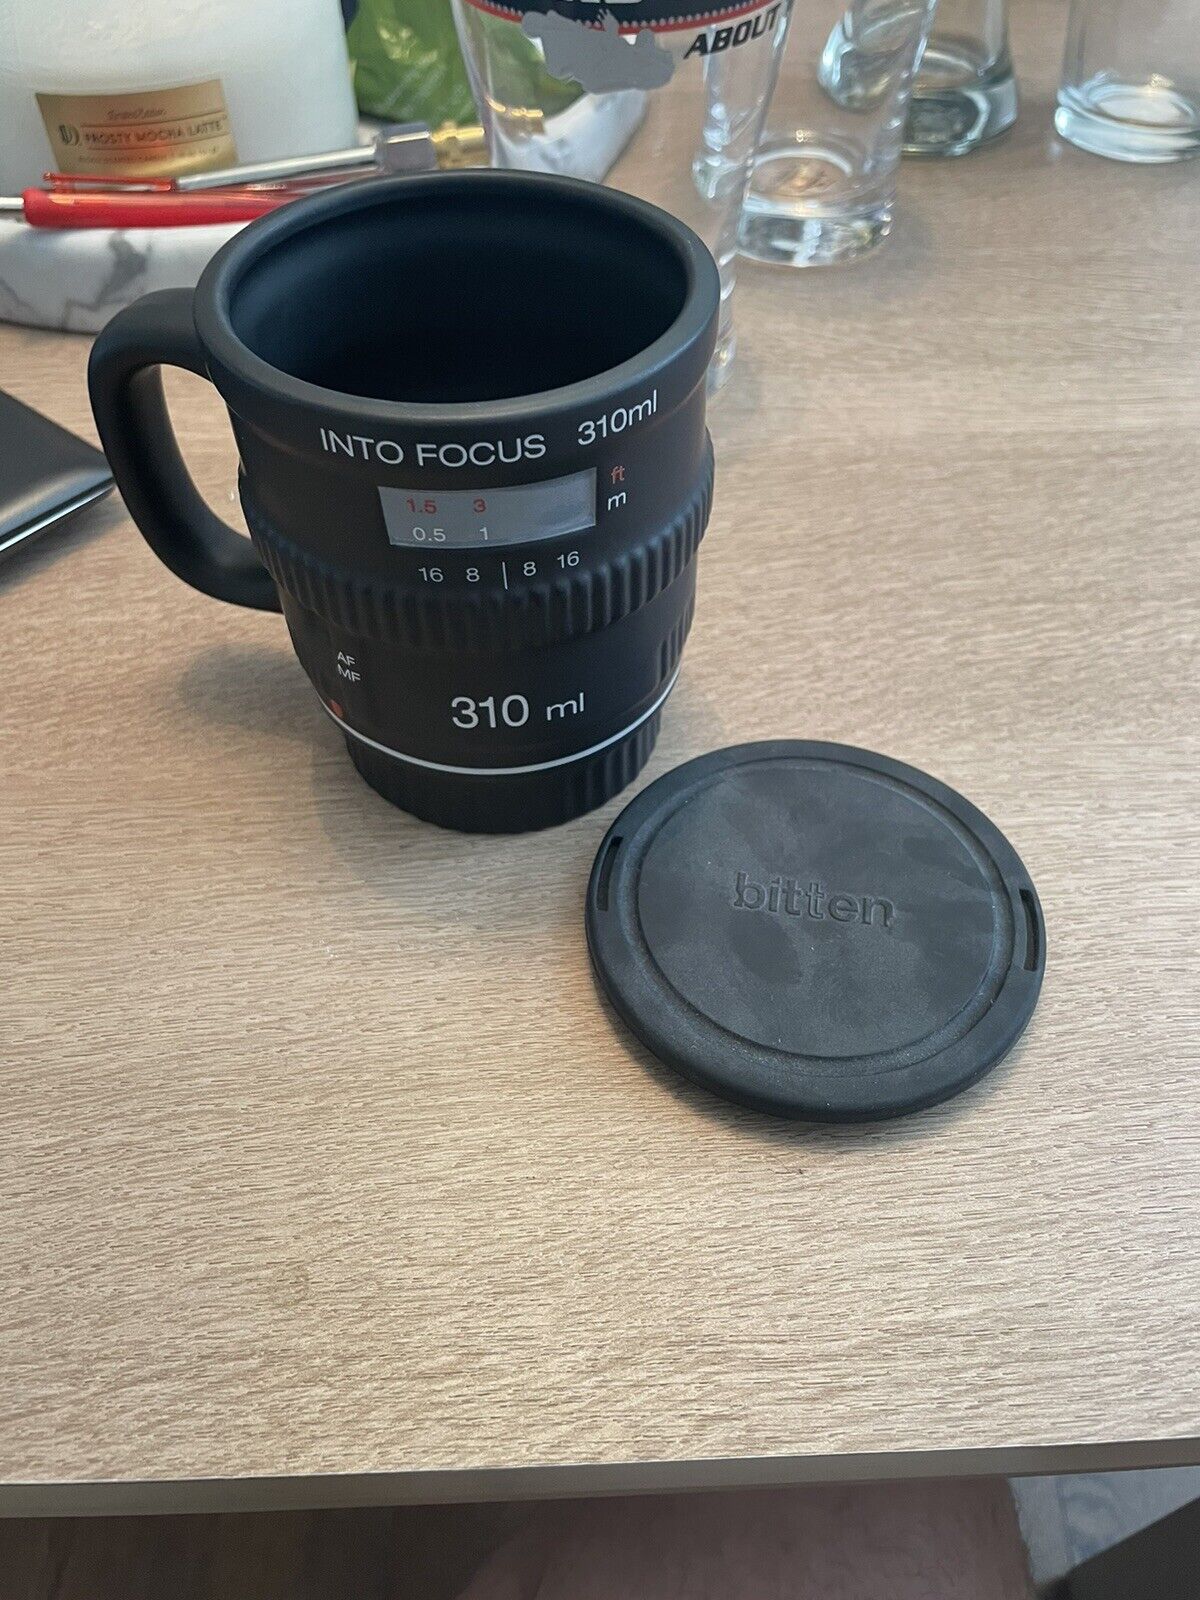 INTO FOCUS CAMERA LENS MUG - Tea Coffee Ceramic Cup Mug Silicone Lid Bitten NIB